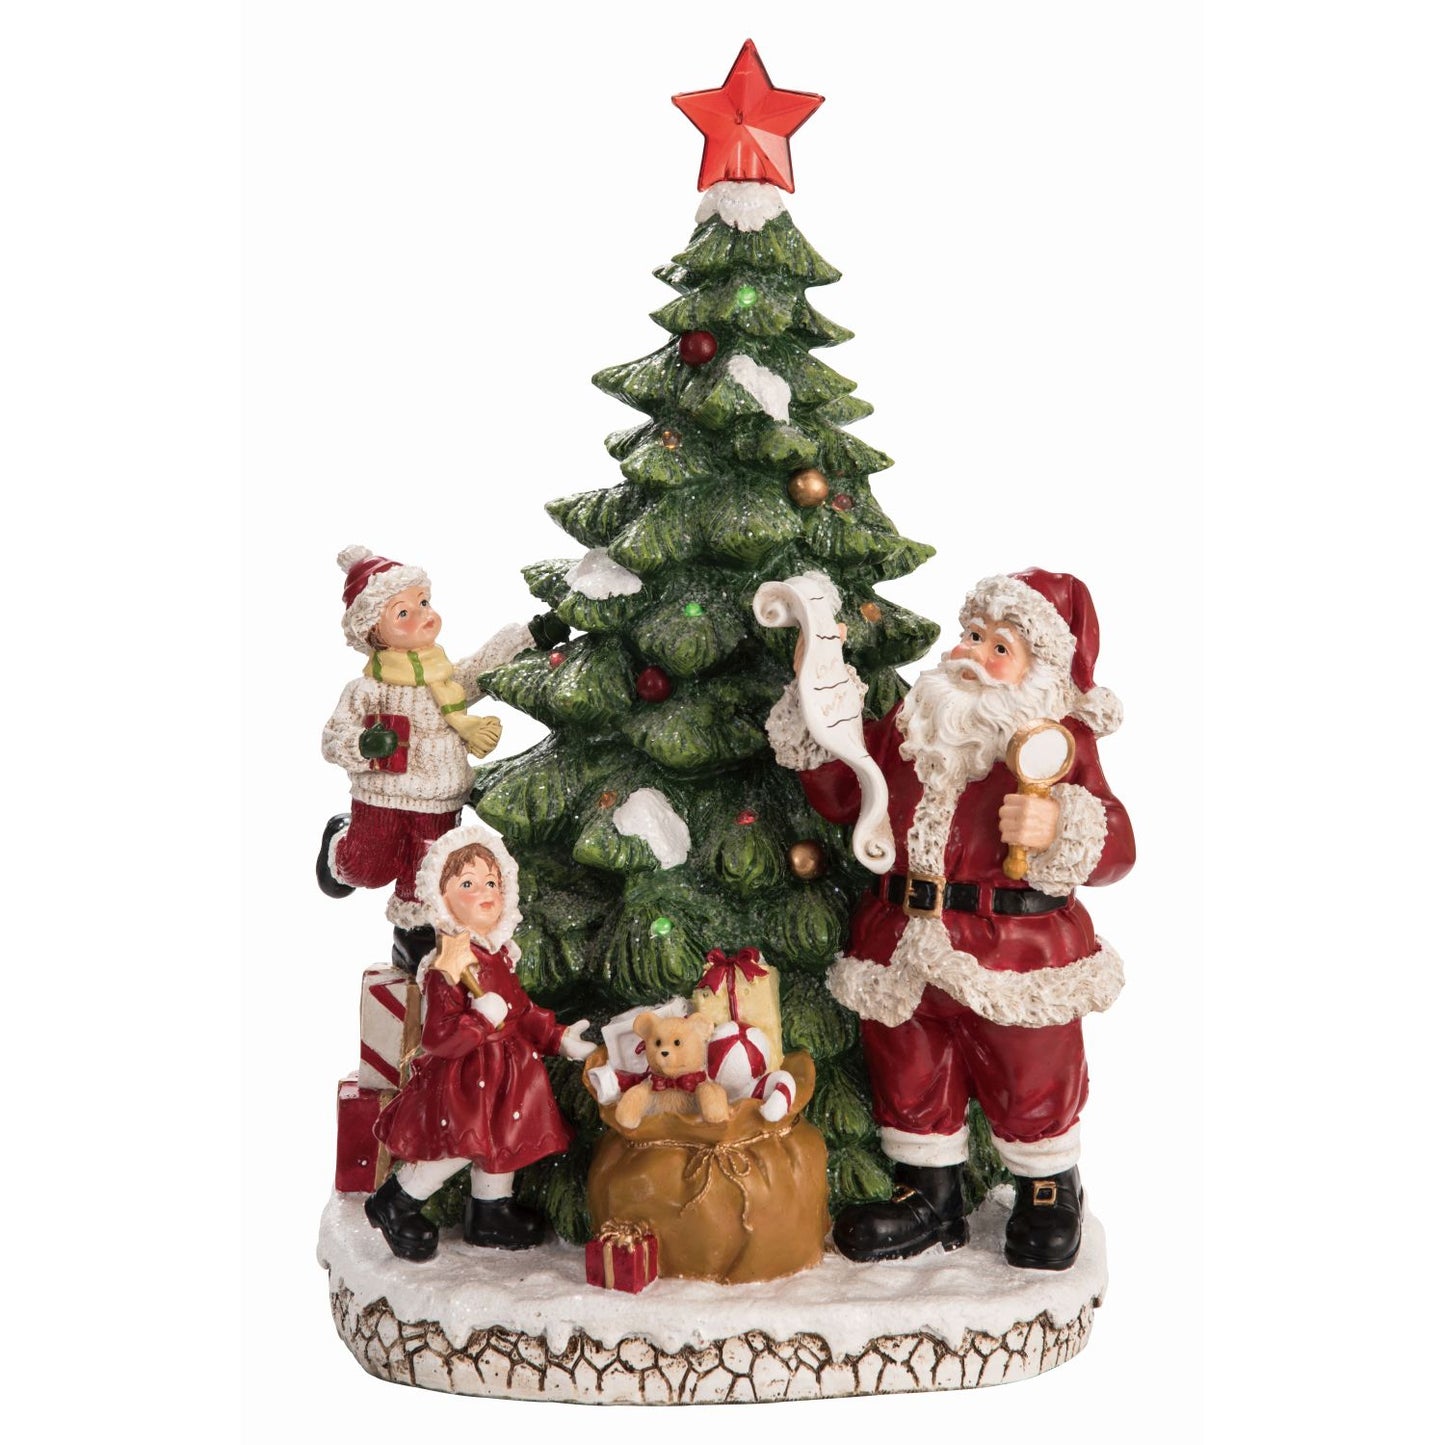 Transpac Resin Light Up Tree With Santa